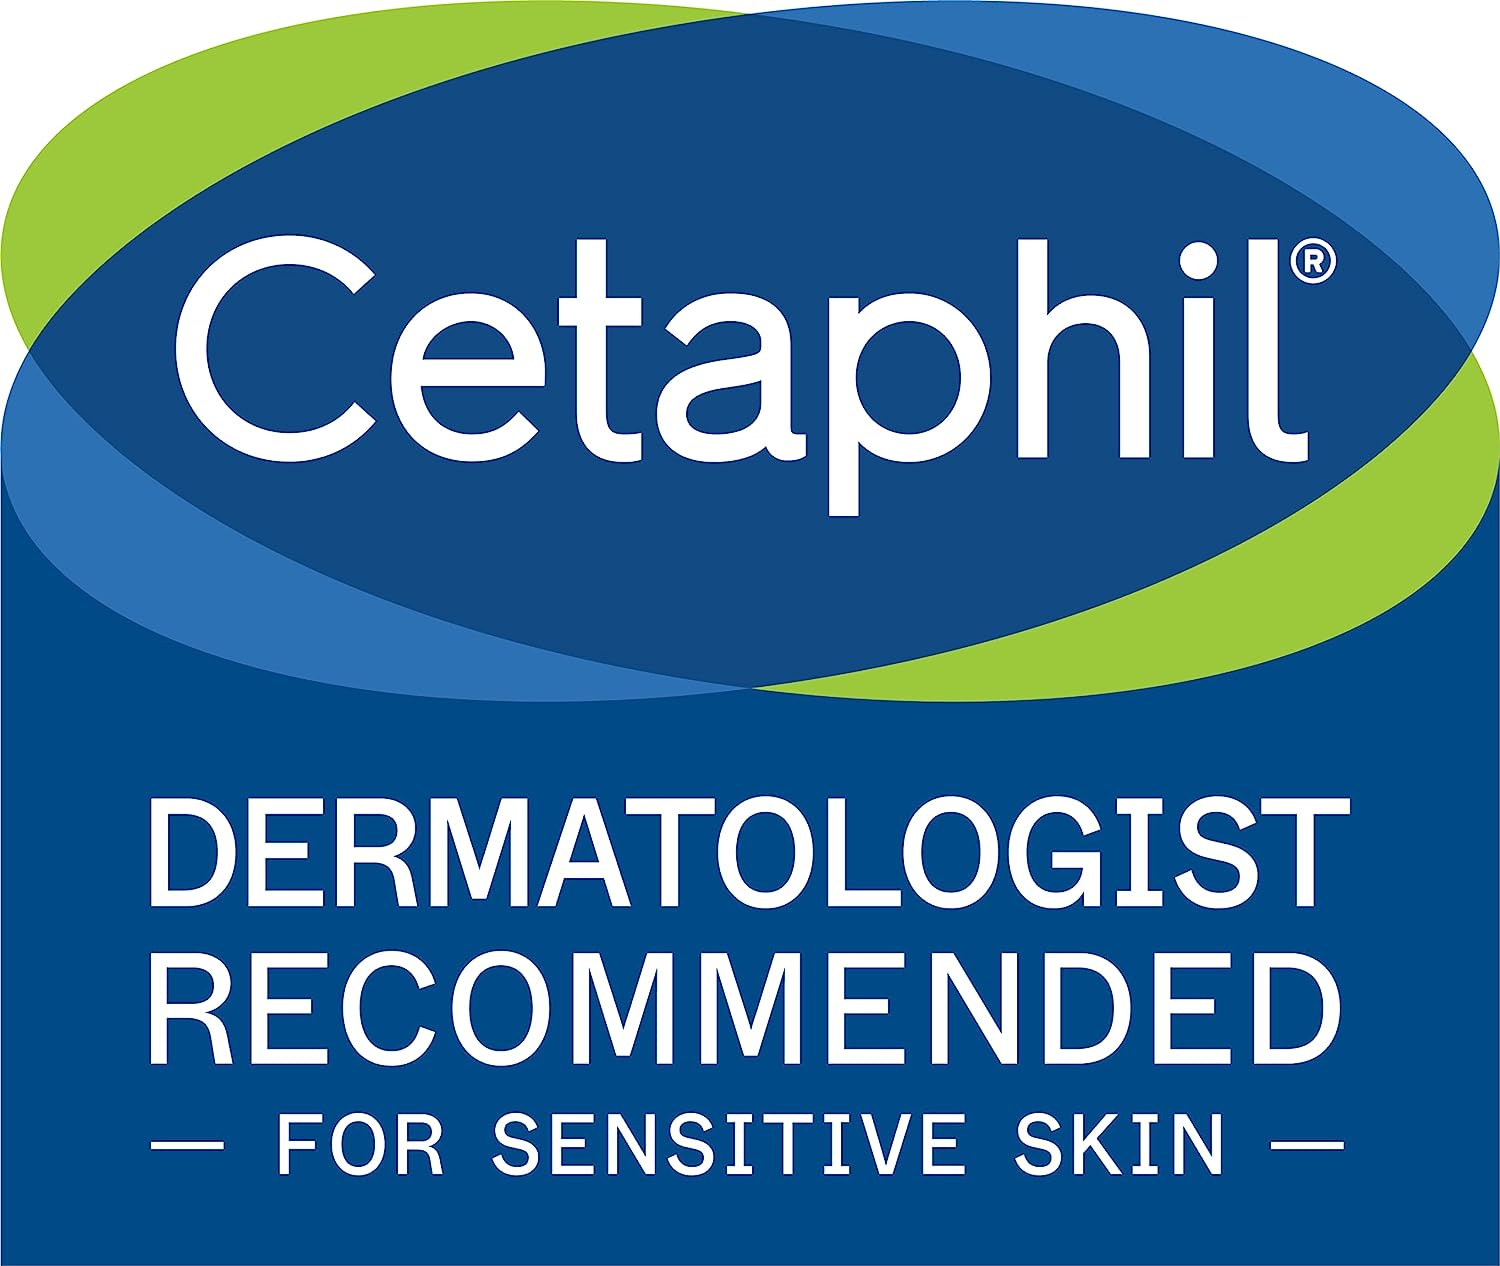 Cetaphil Face Moisturizer, Gentle Clear Mattifying Acne Moisturizer With 0.5% Salicylic Acid, Hydrates and Treats Sensitive Acne Prone Skin, Skin Care for Sensitive Skin, 3oz